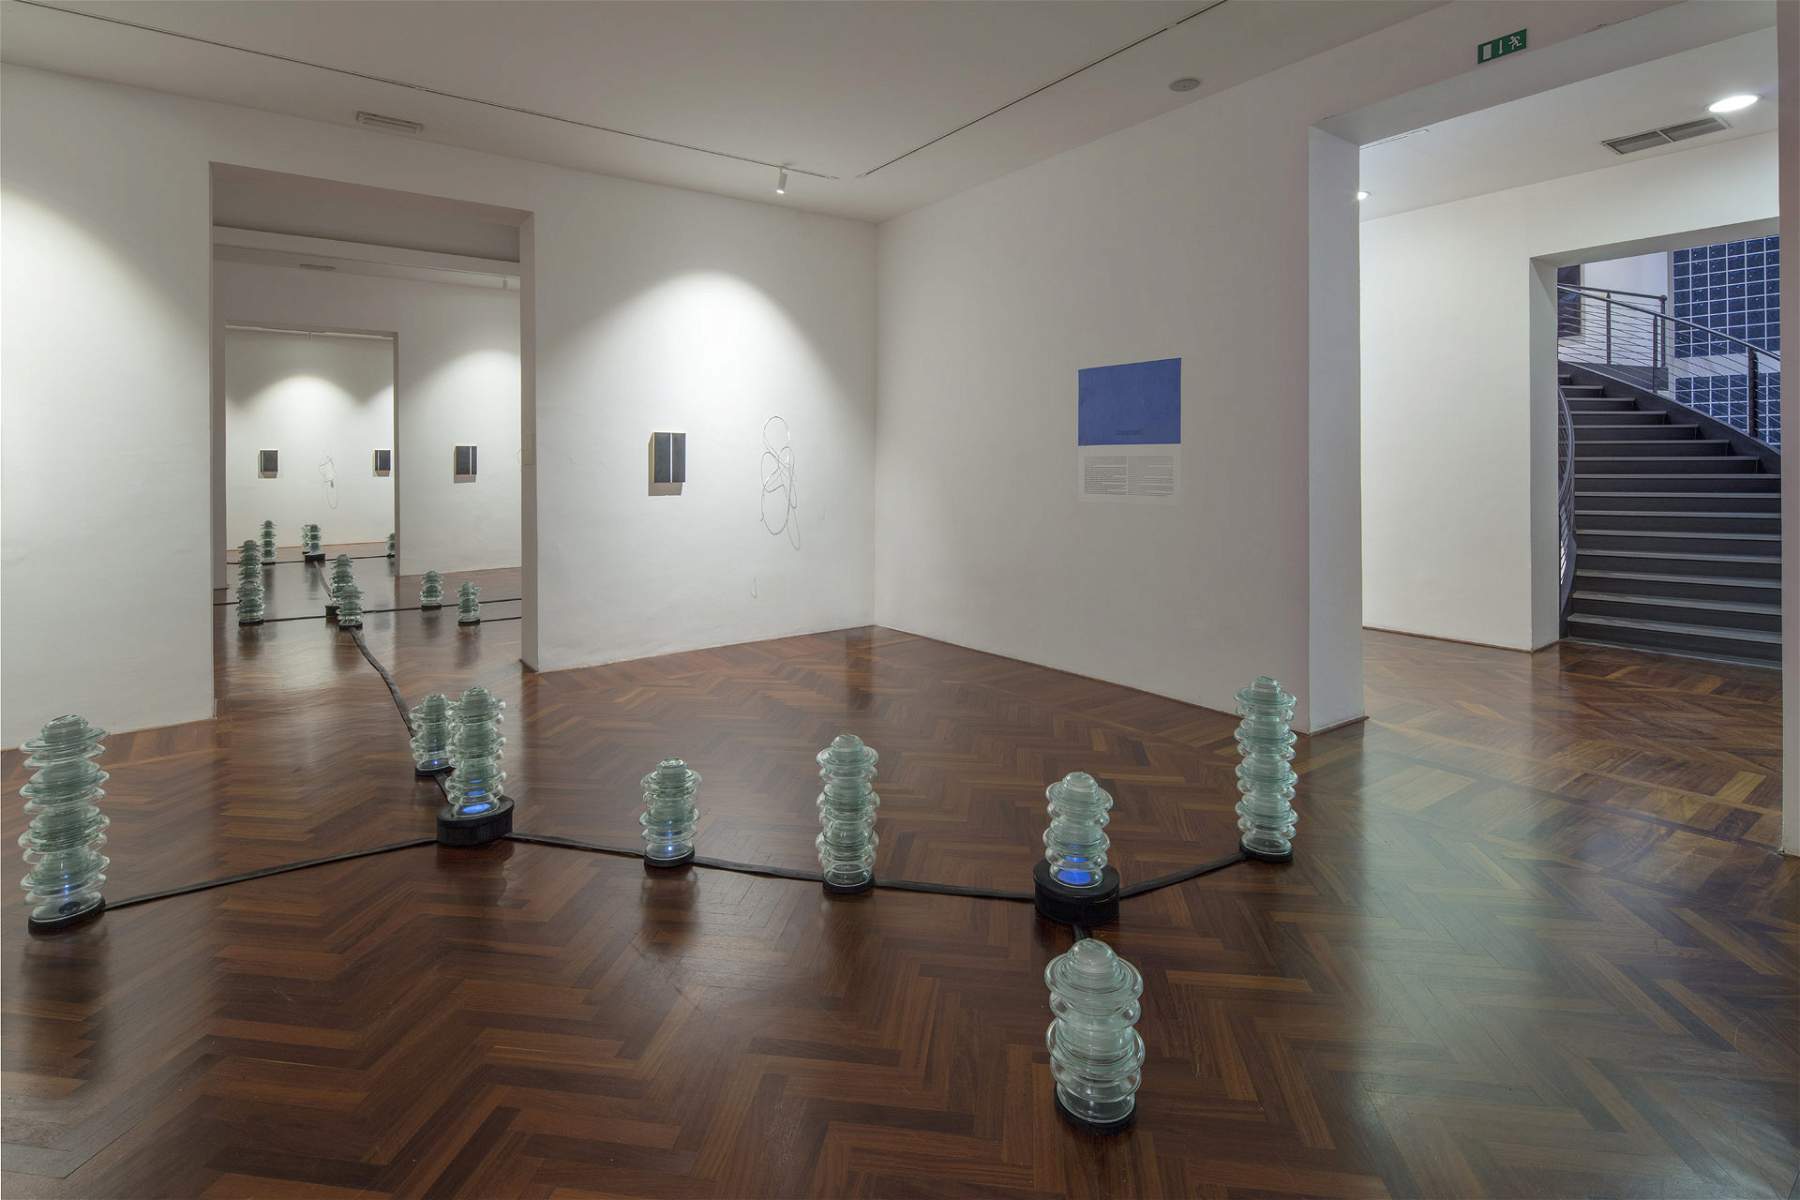 Bacteria and planets, Michelangelo Penso's Infinite Dimensions on display in La Spezia